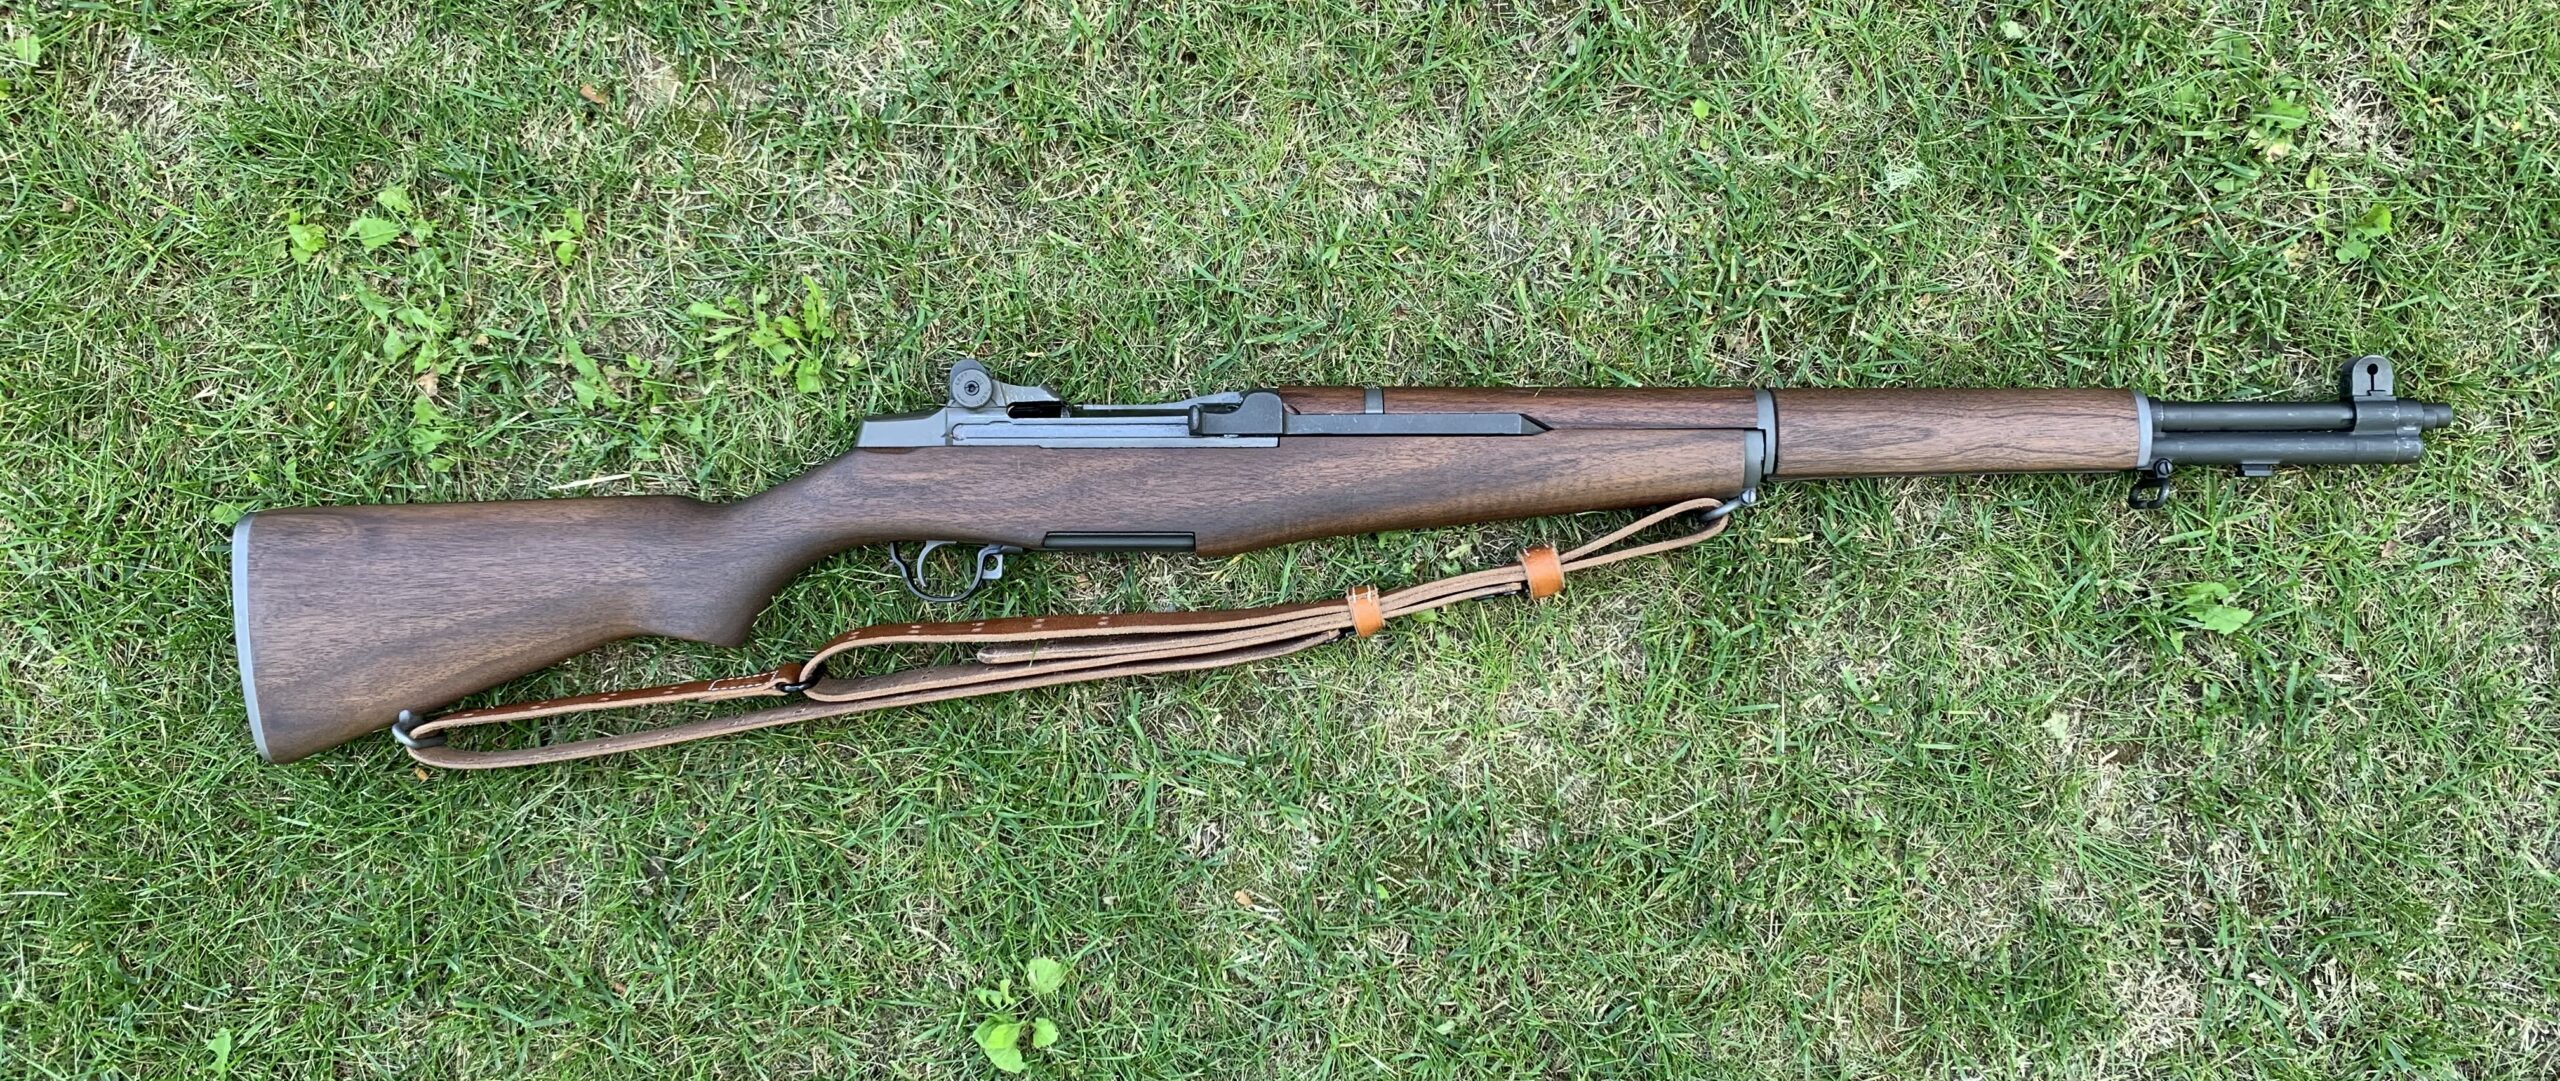 DIY: How to Resurrect Old Guns - The Shooter's Log